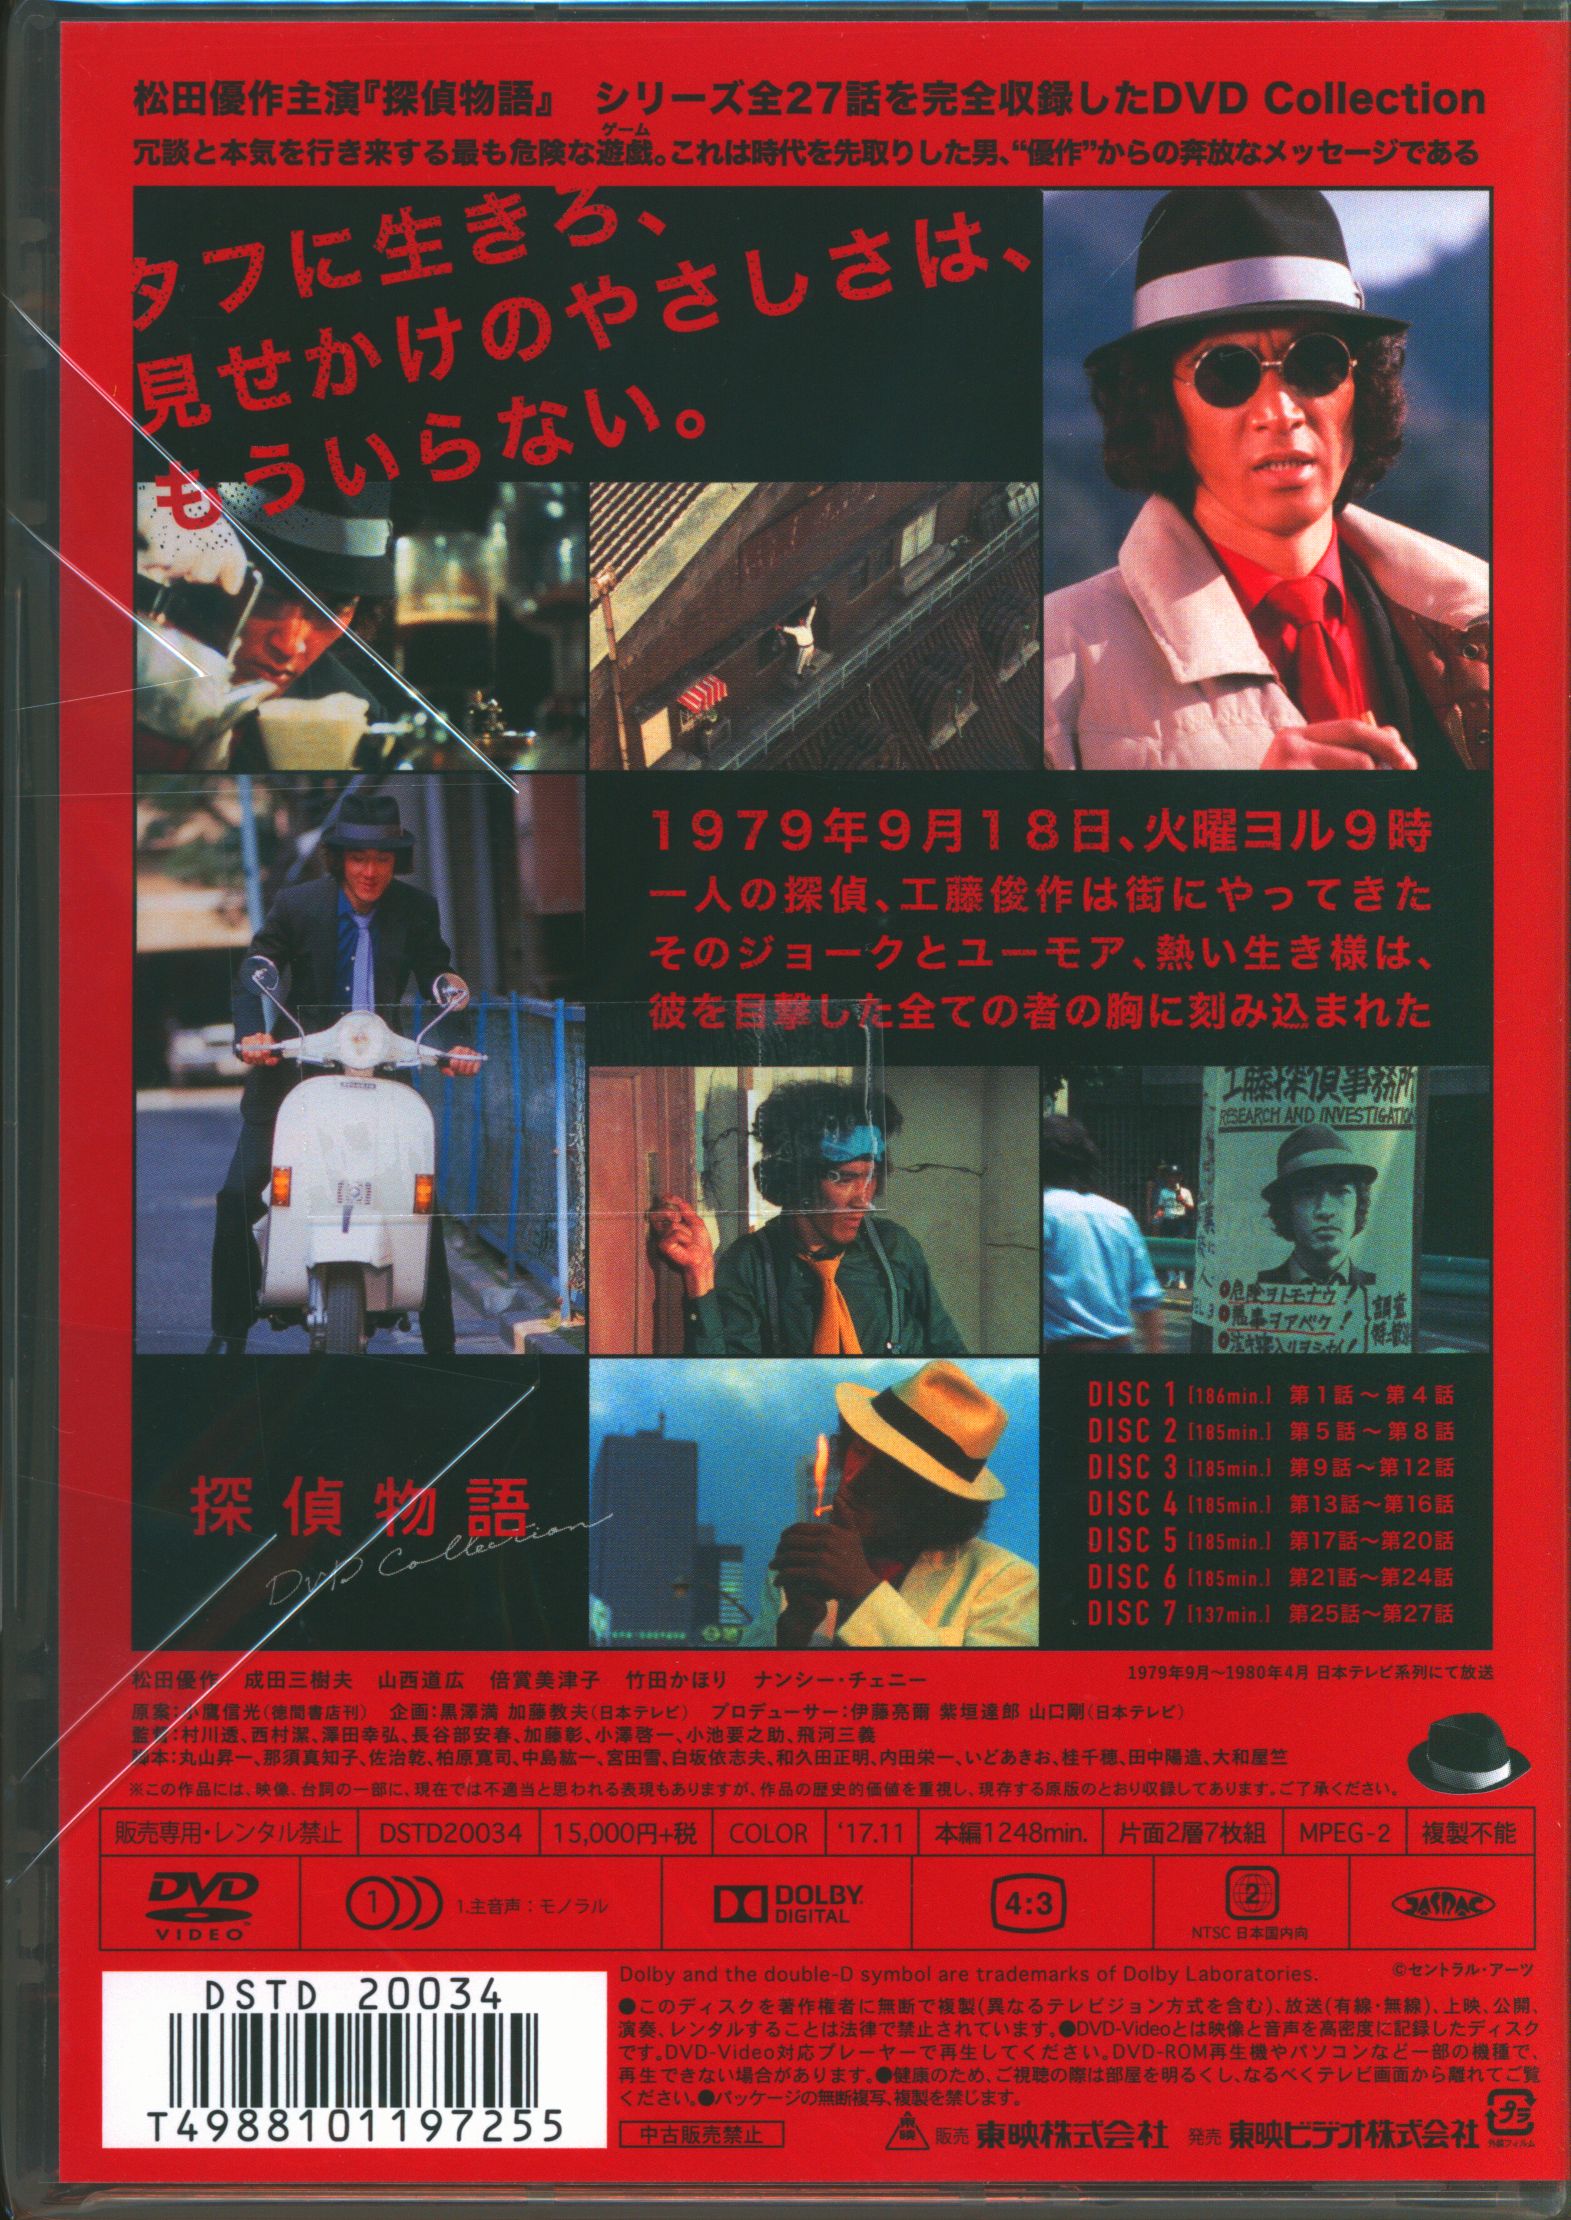 探偵物語】DVD Collection〈7枚組〉 - 日本映画